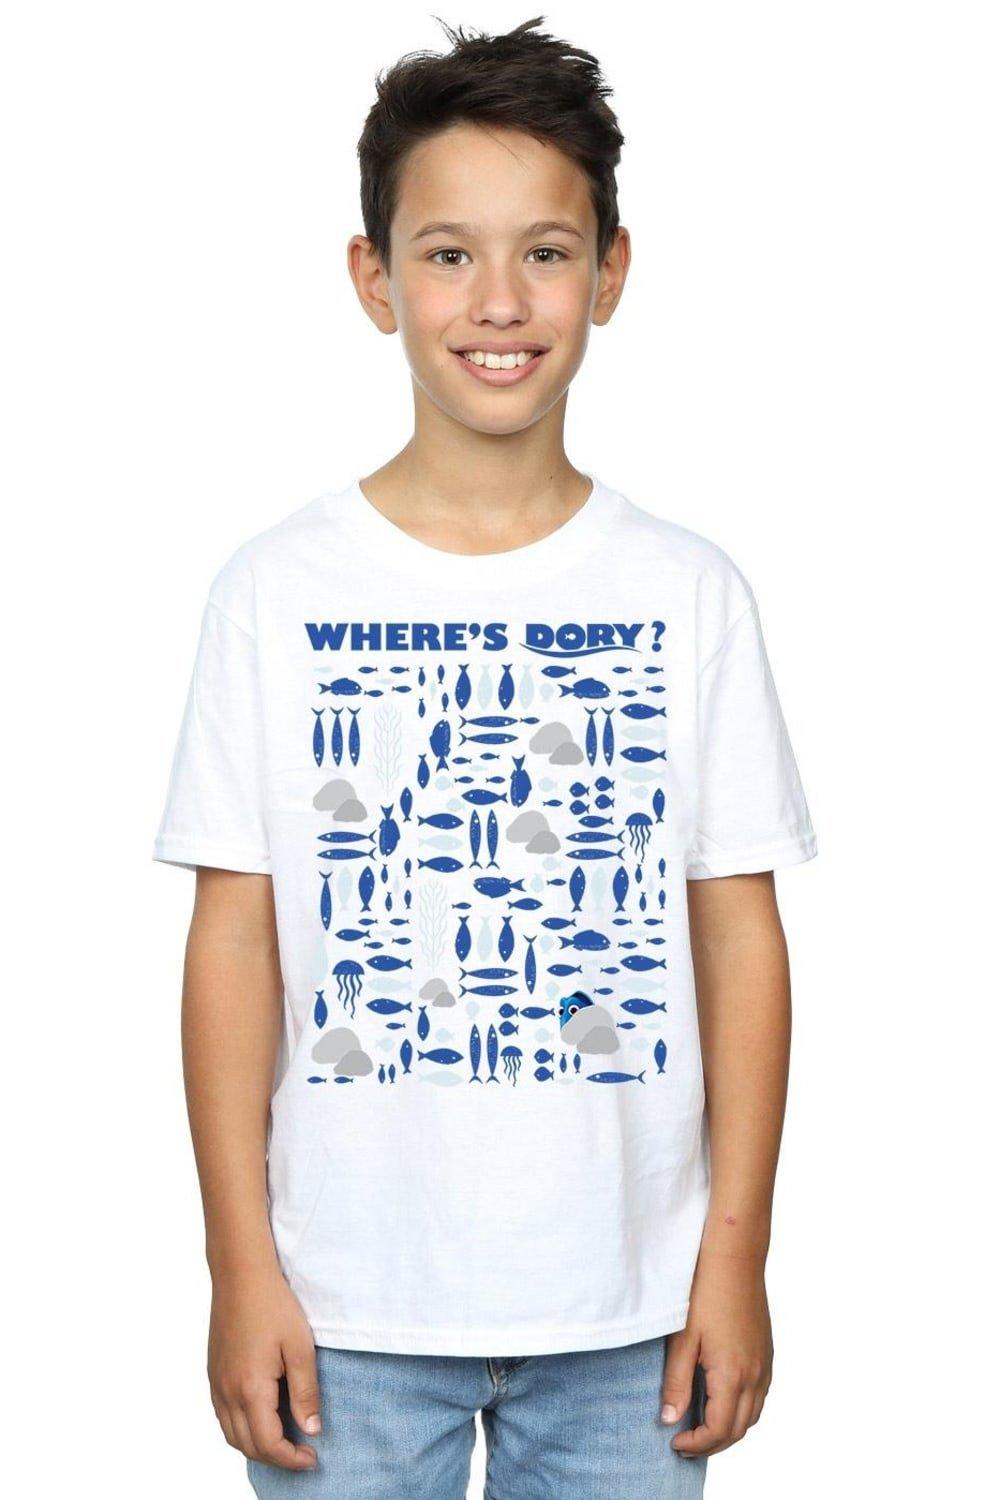 Finding Dory Where’s Dory? T-Shirt